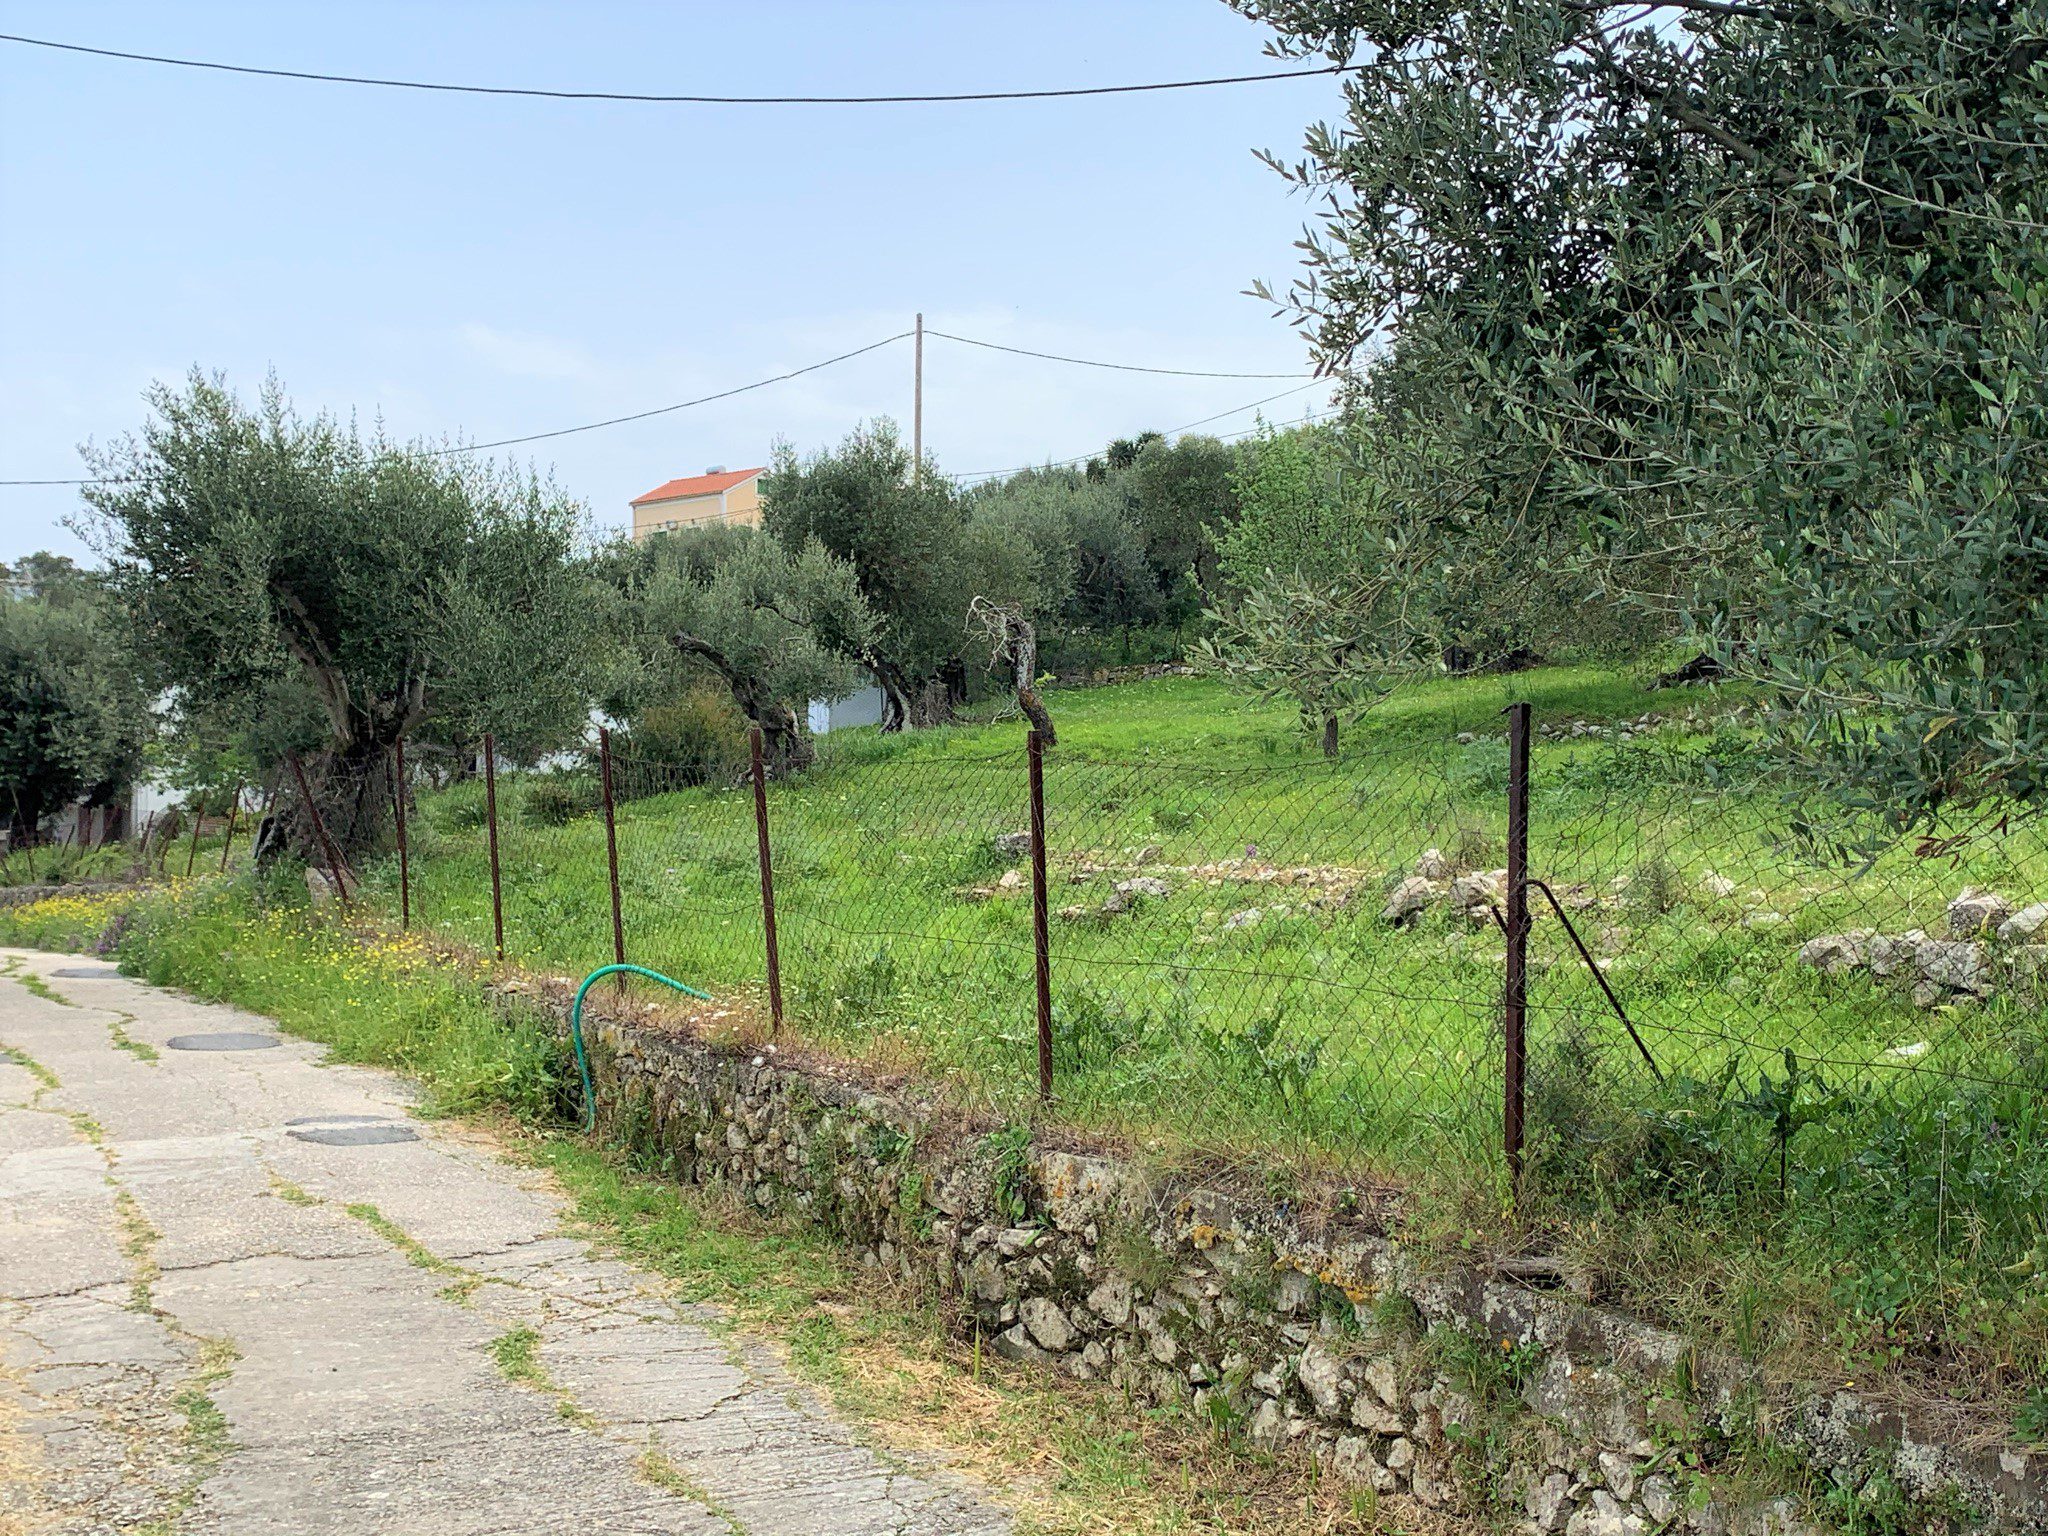 Road access of land for sale in Ithaca Greece, Kolleri